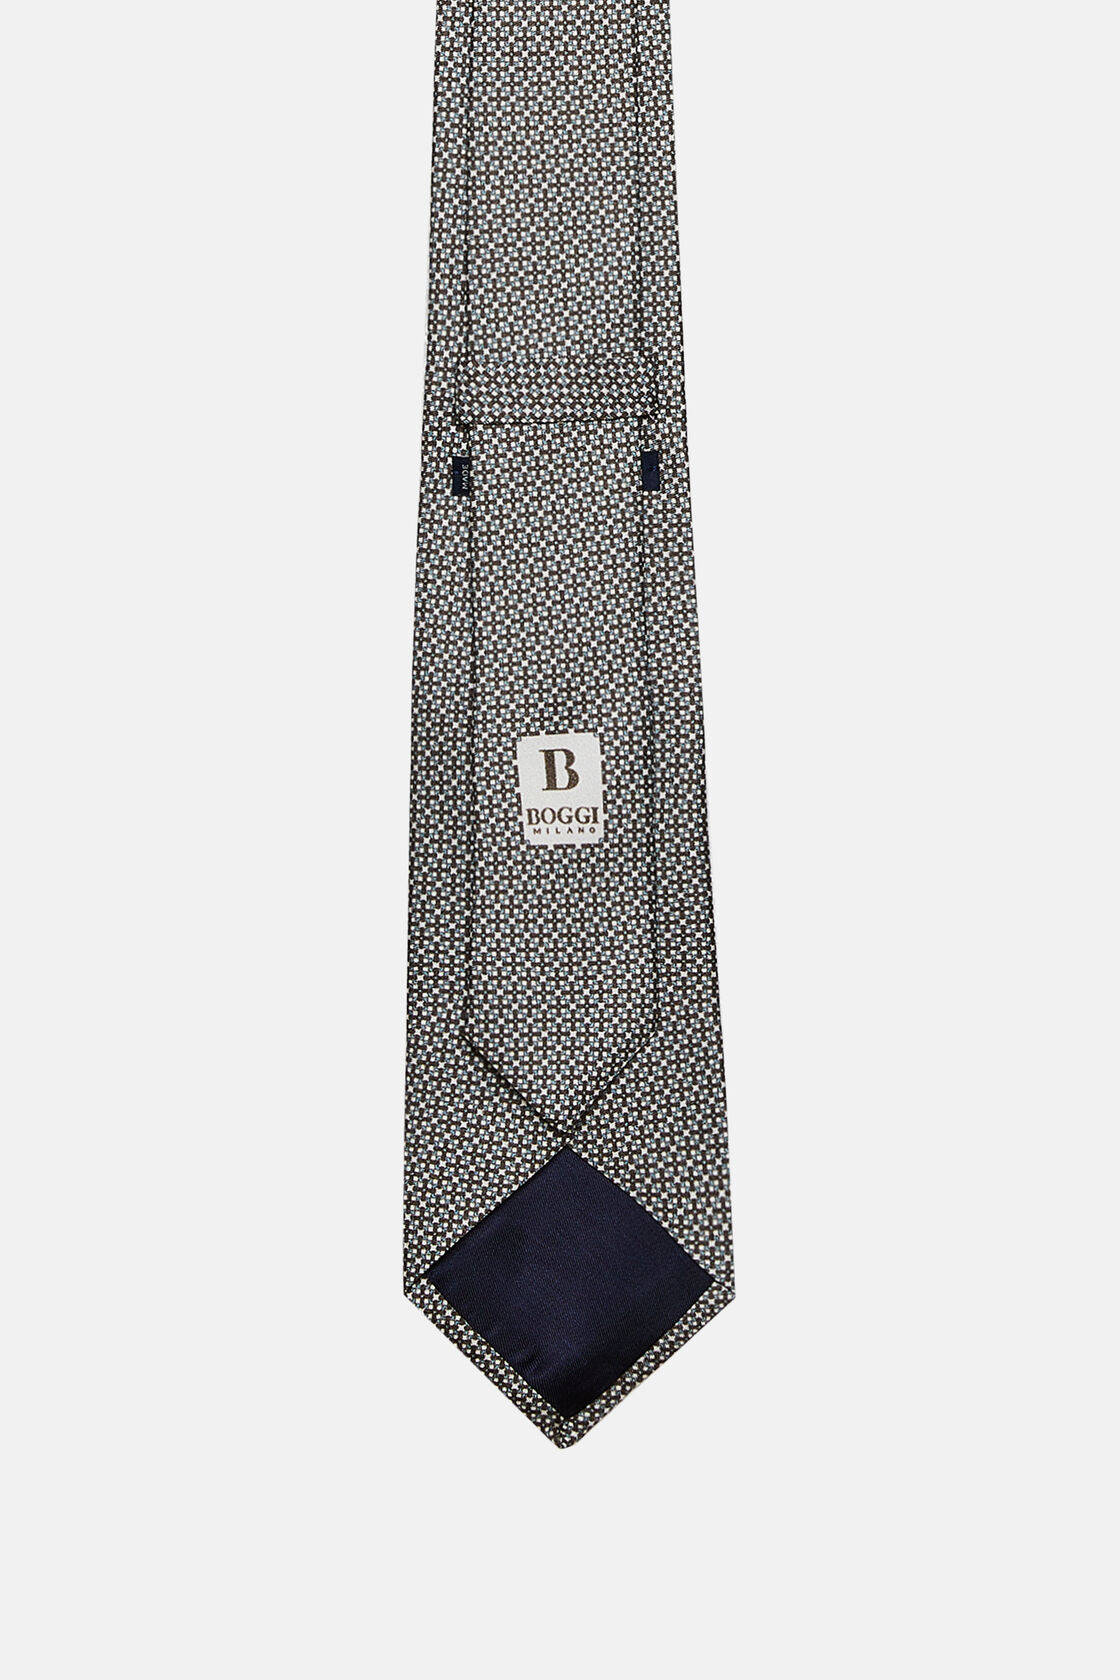 Jedwabny krawat w drobny wzór, Light Blue, hi-res